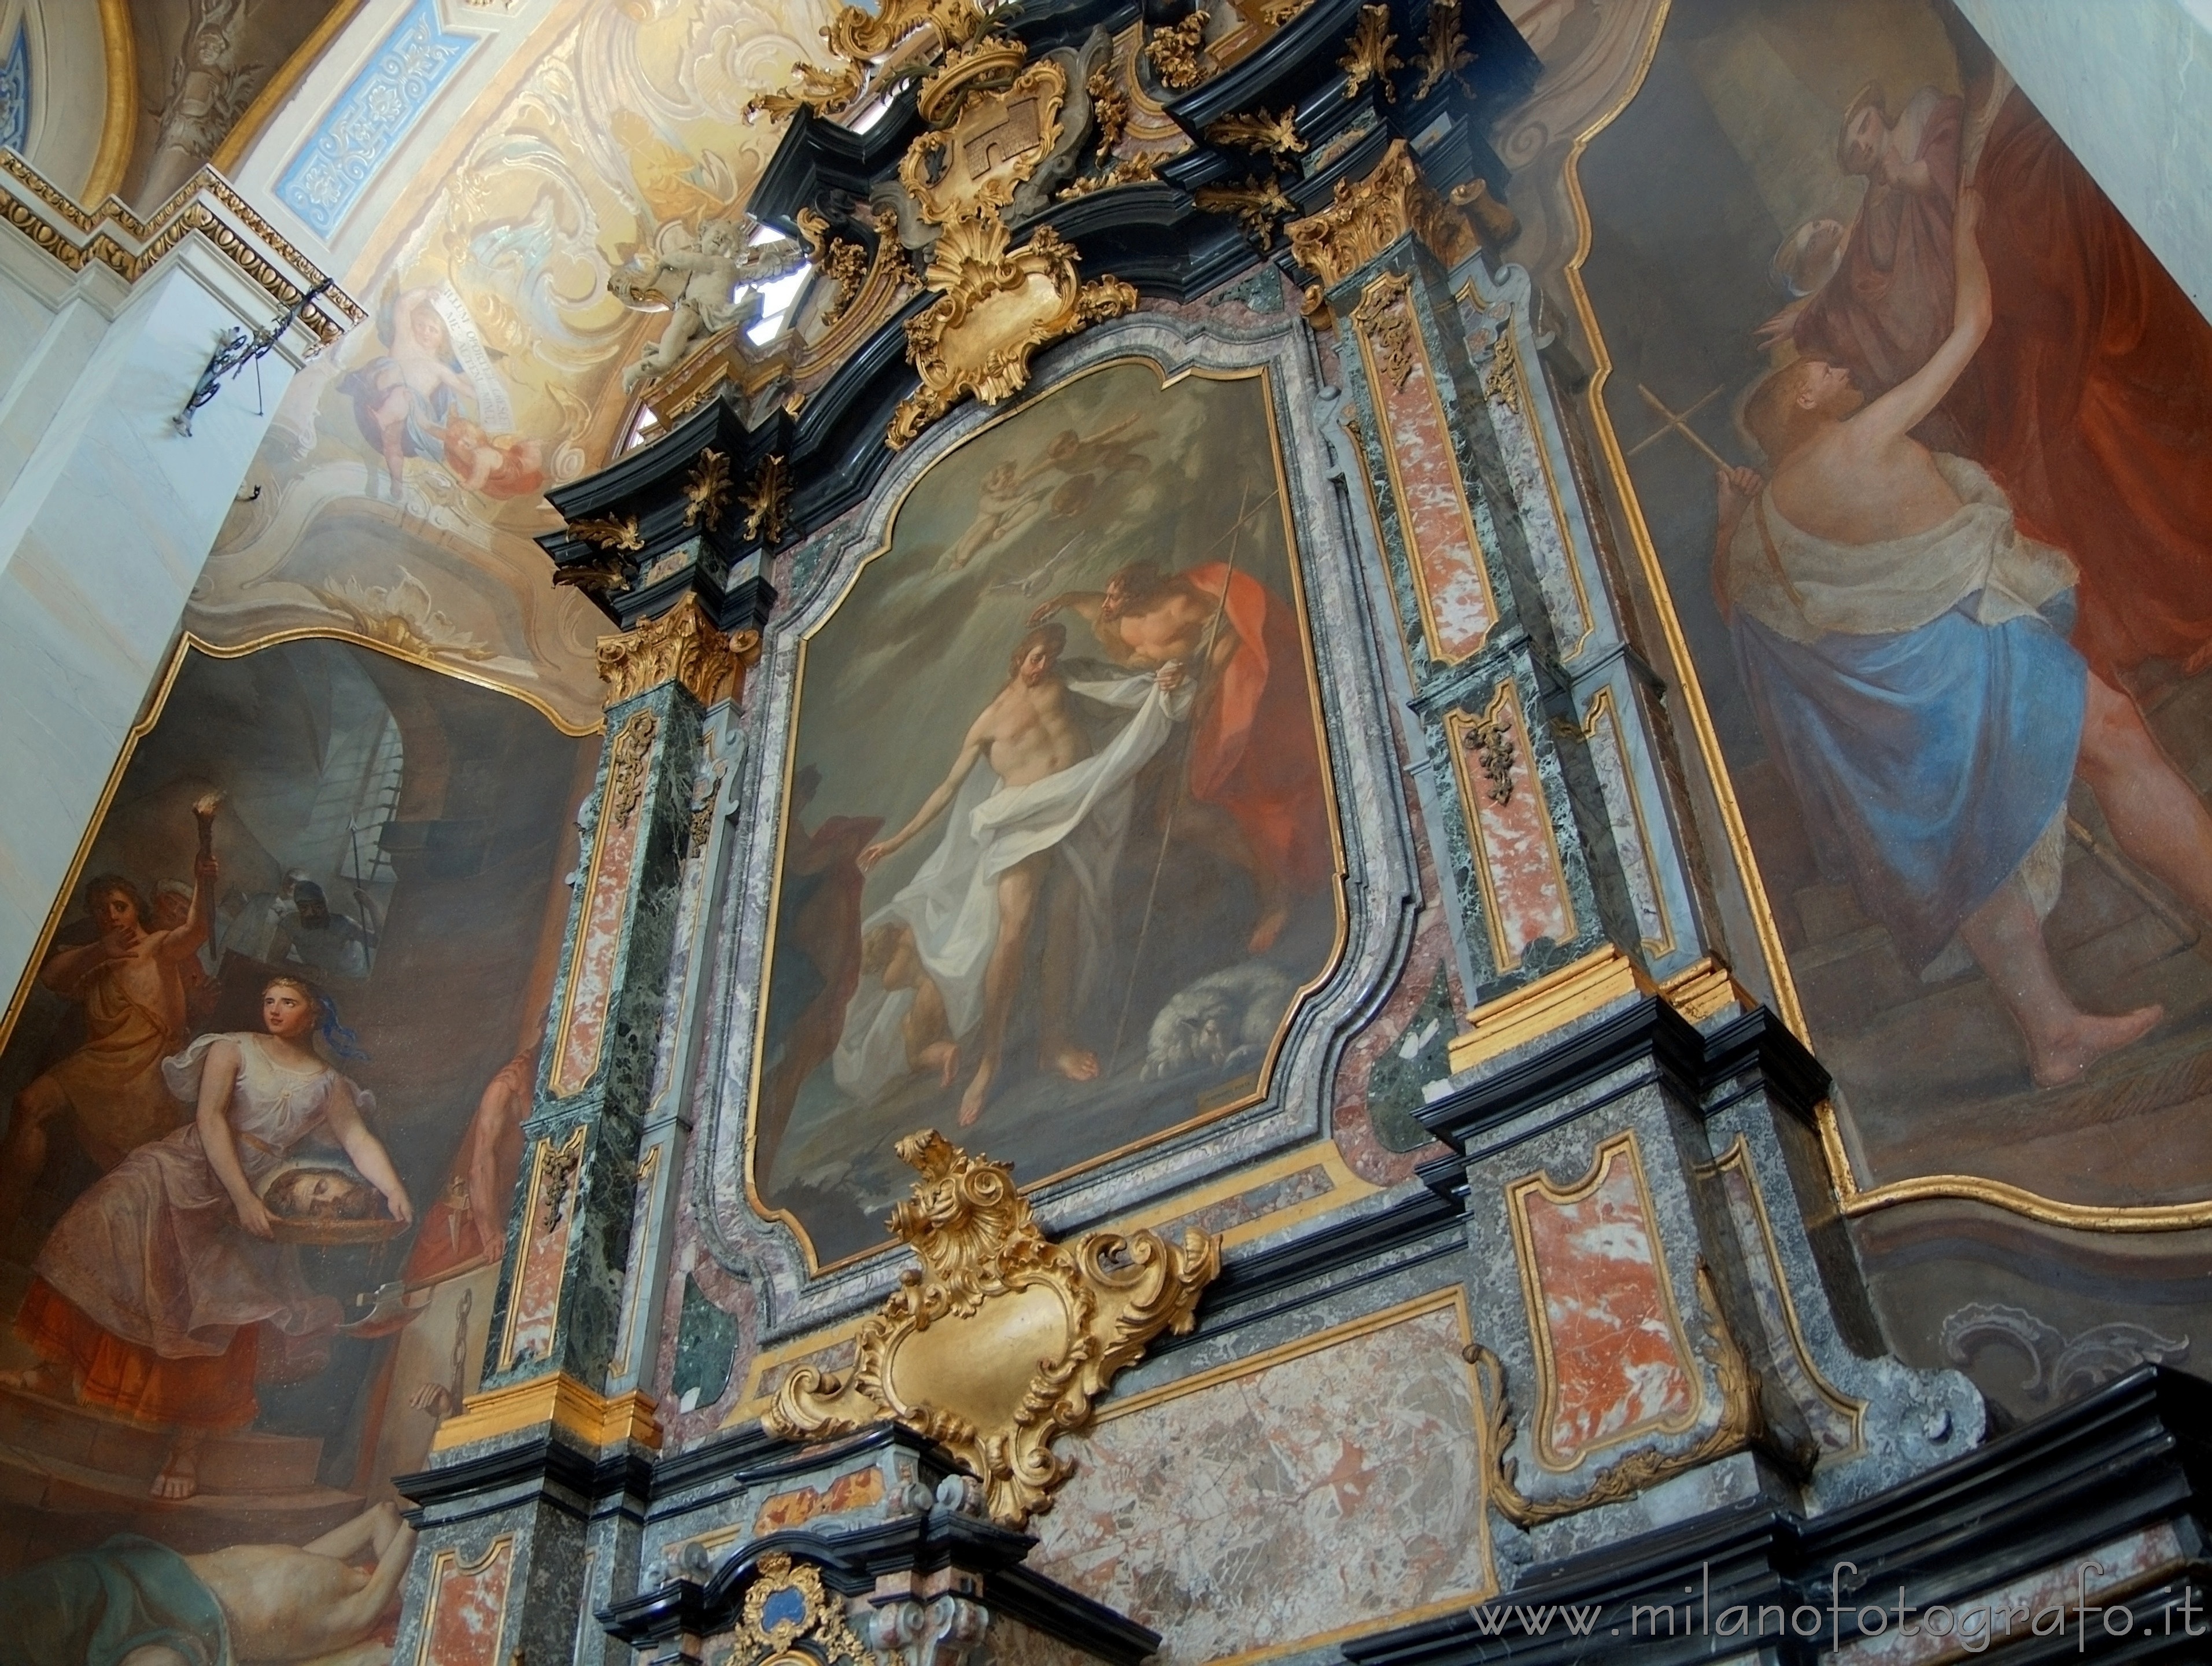 Vigevano (Pavia, Italy): Side altar of the Duomo - Vigevano (Pavia, Italy)